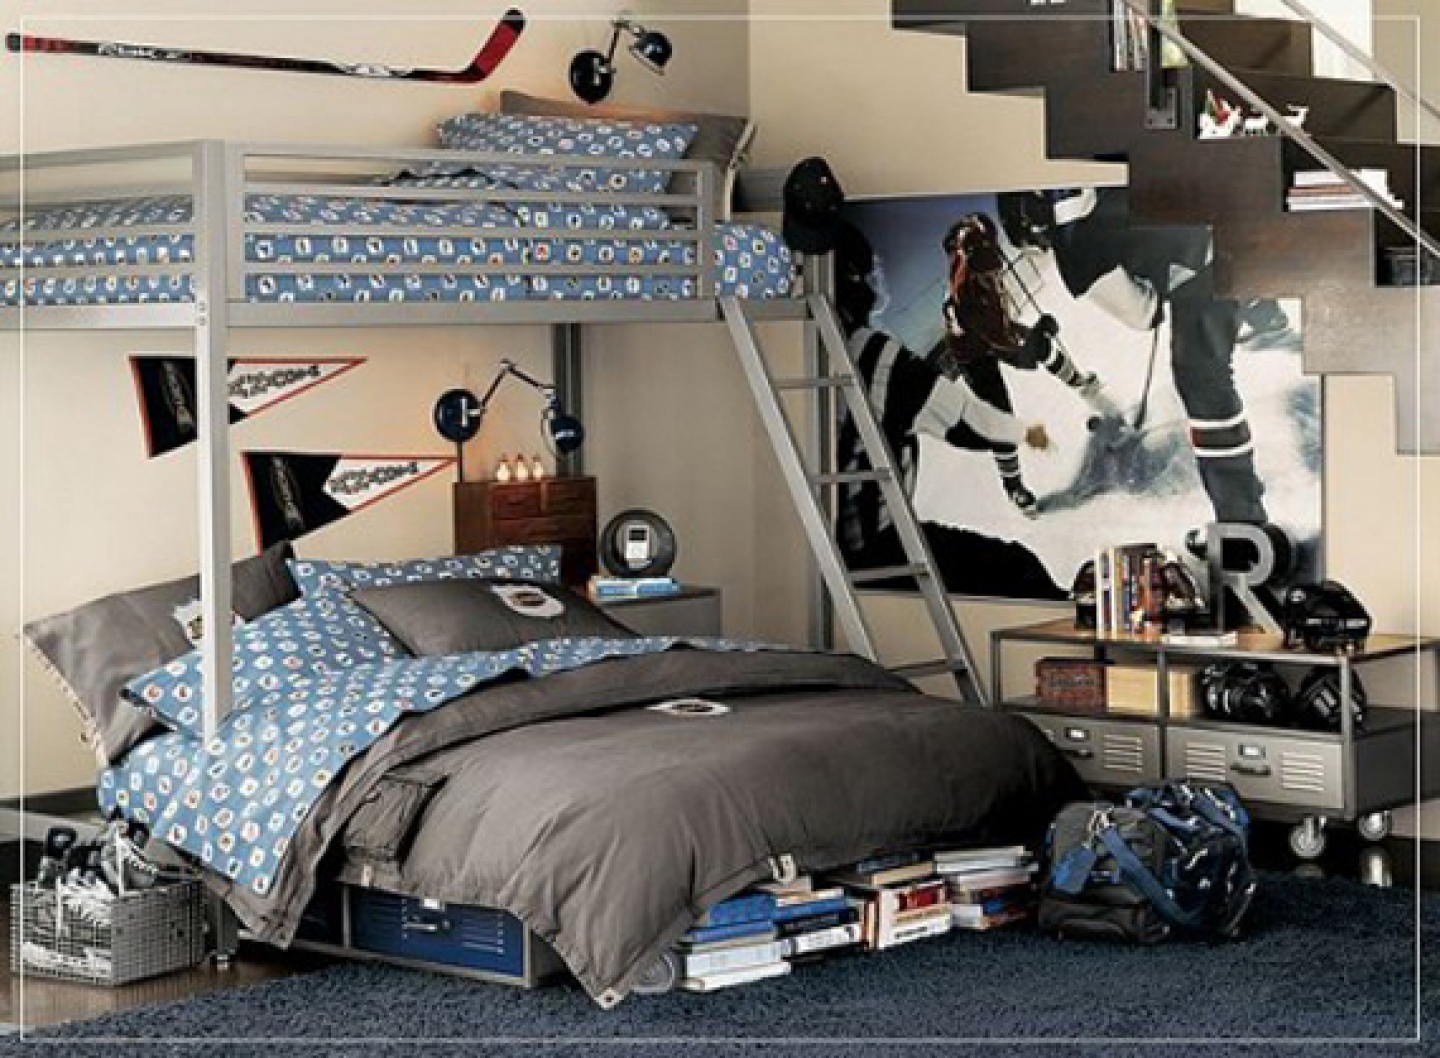 wallpaper teenage room boy,bedroom,bed,furniture,room,bed sheet